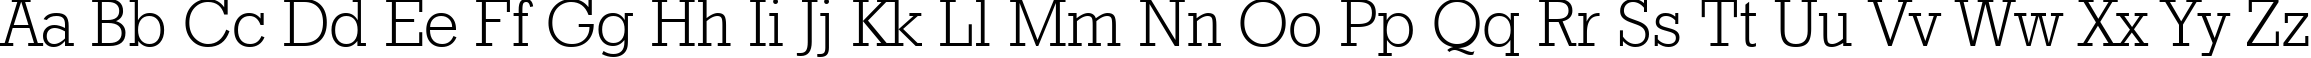 Пример написания английского алфавита шрифтом RodeoLight